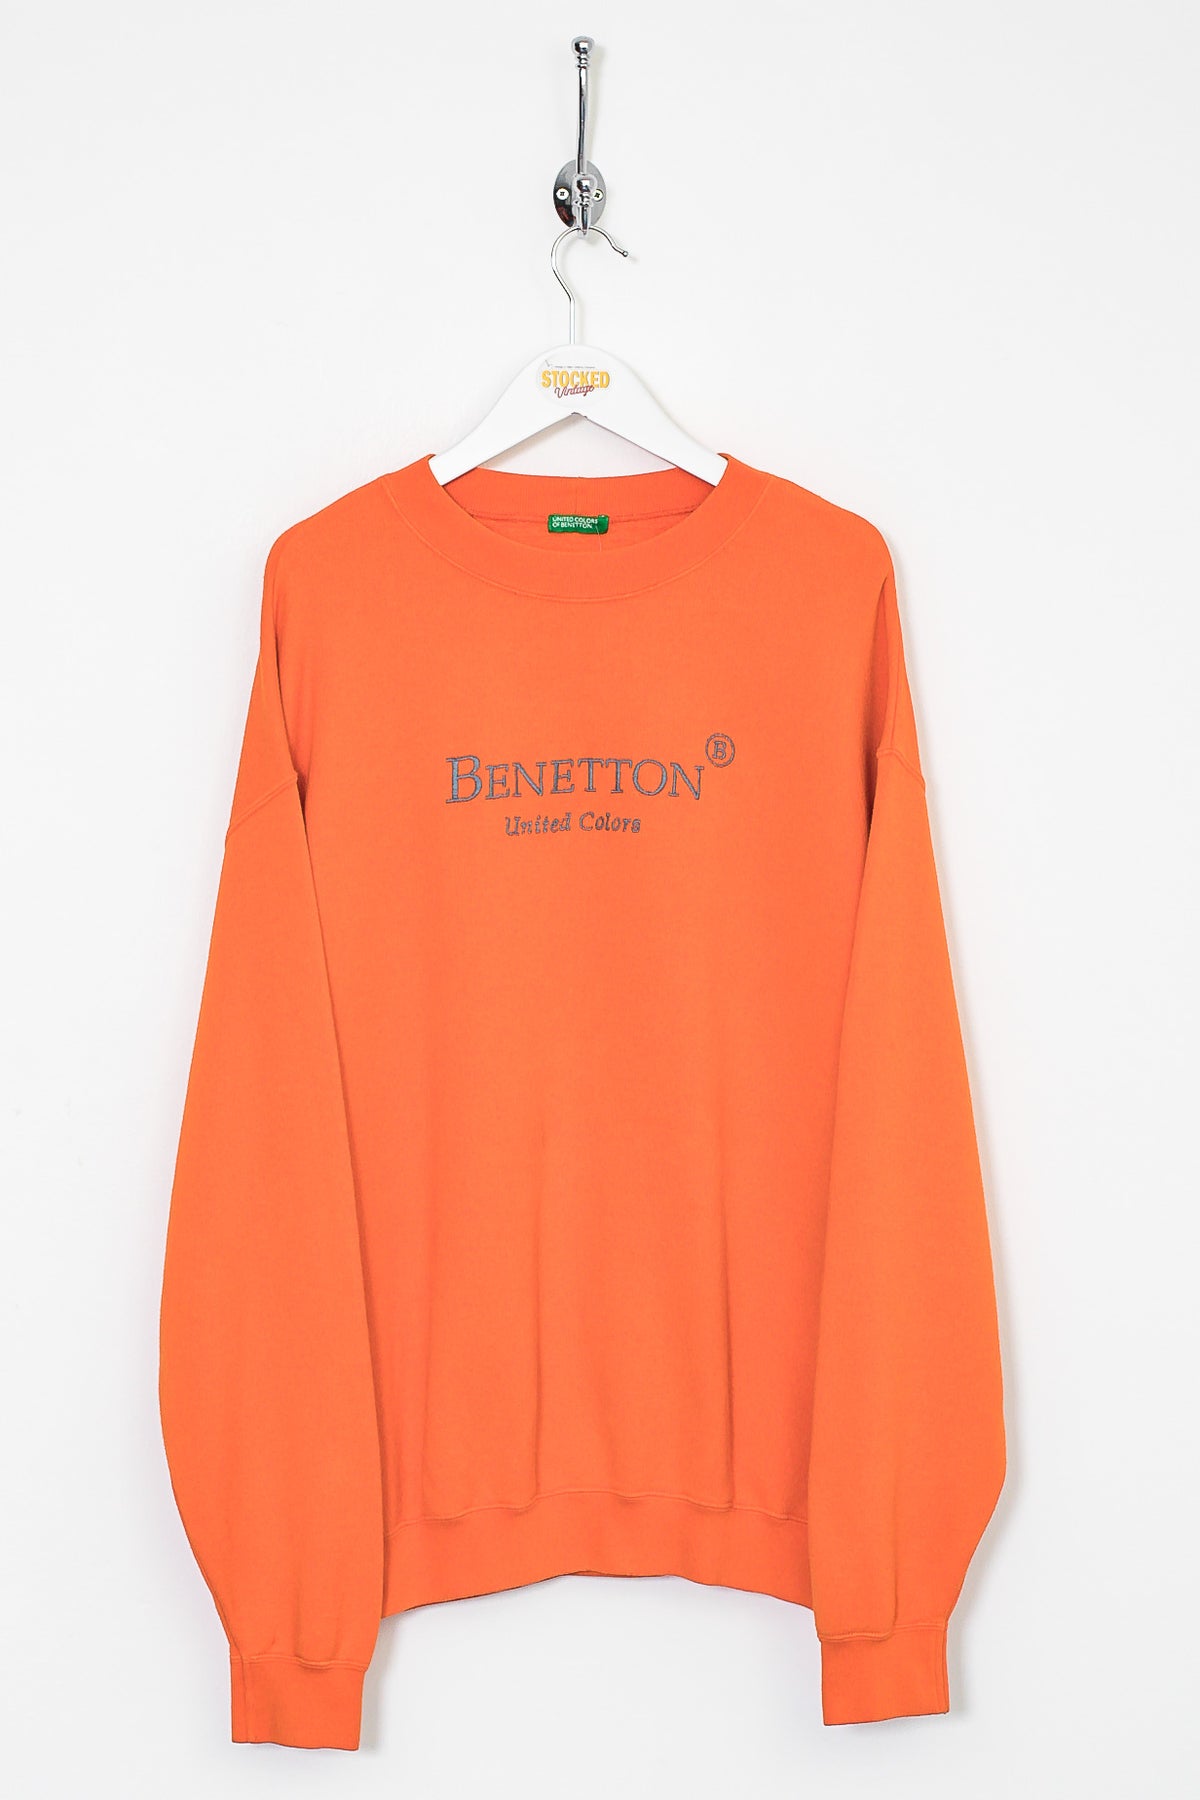 00s Benetton Sweatshirt (L)